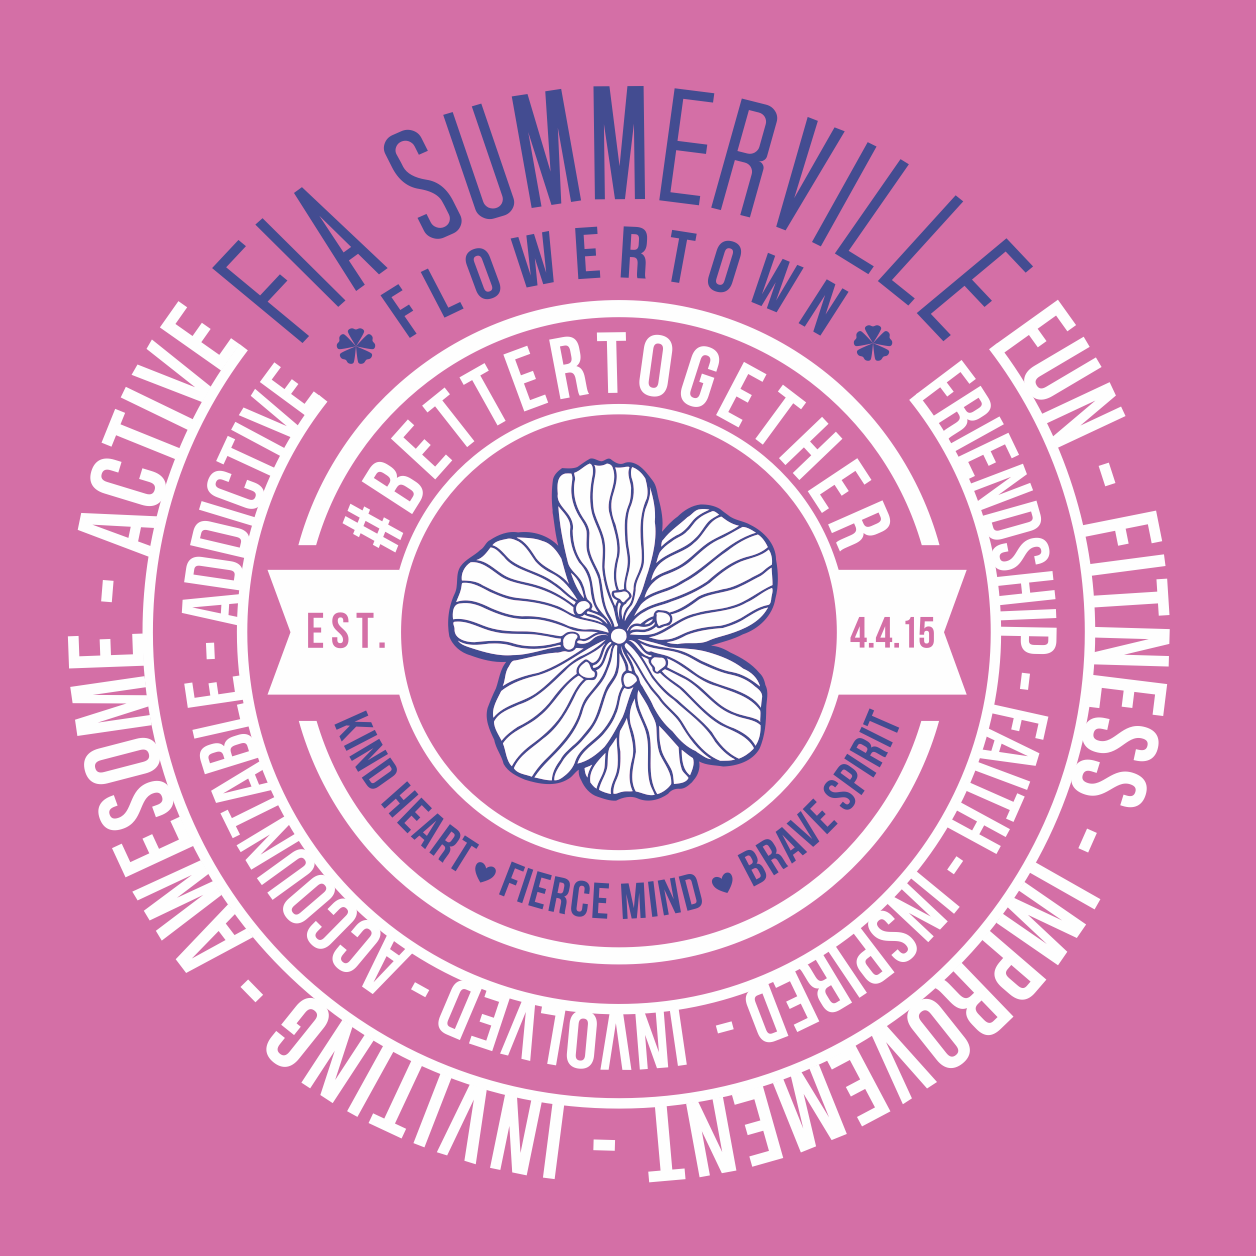 FiA Summerville 2016 Sport-Tek Ladies Competitor Tee (Neon Pink) Pre-Order